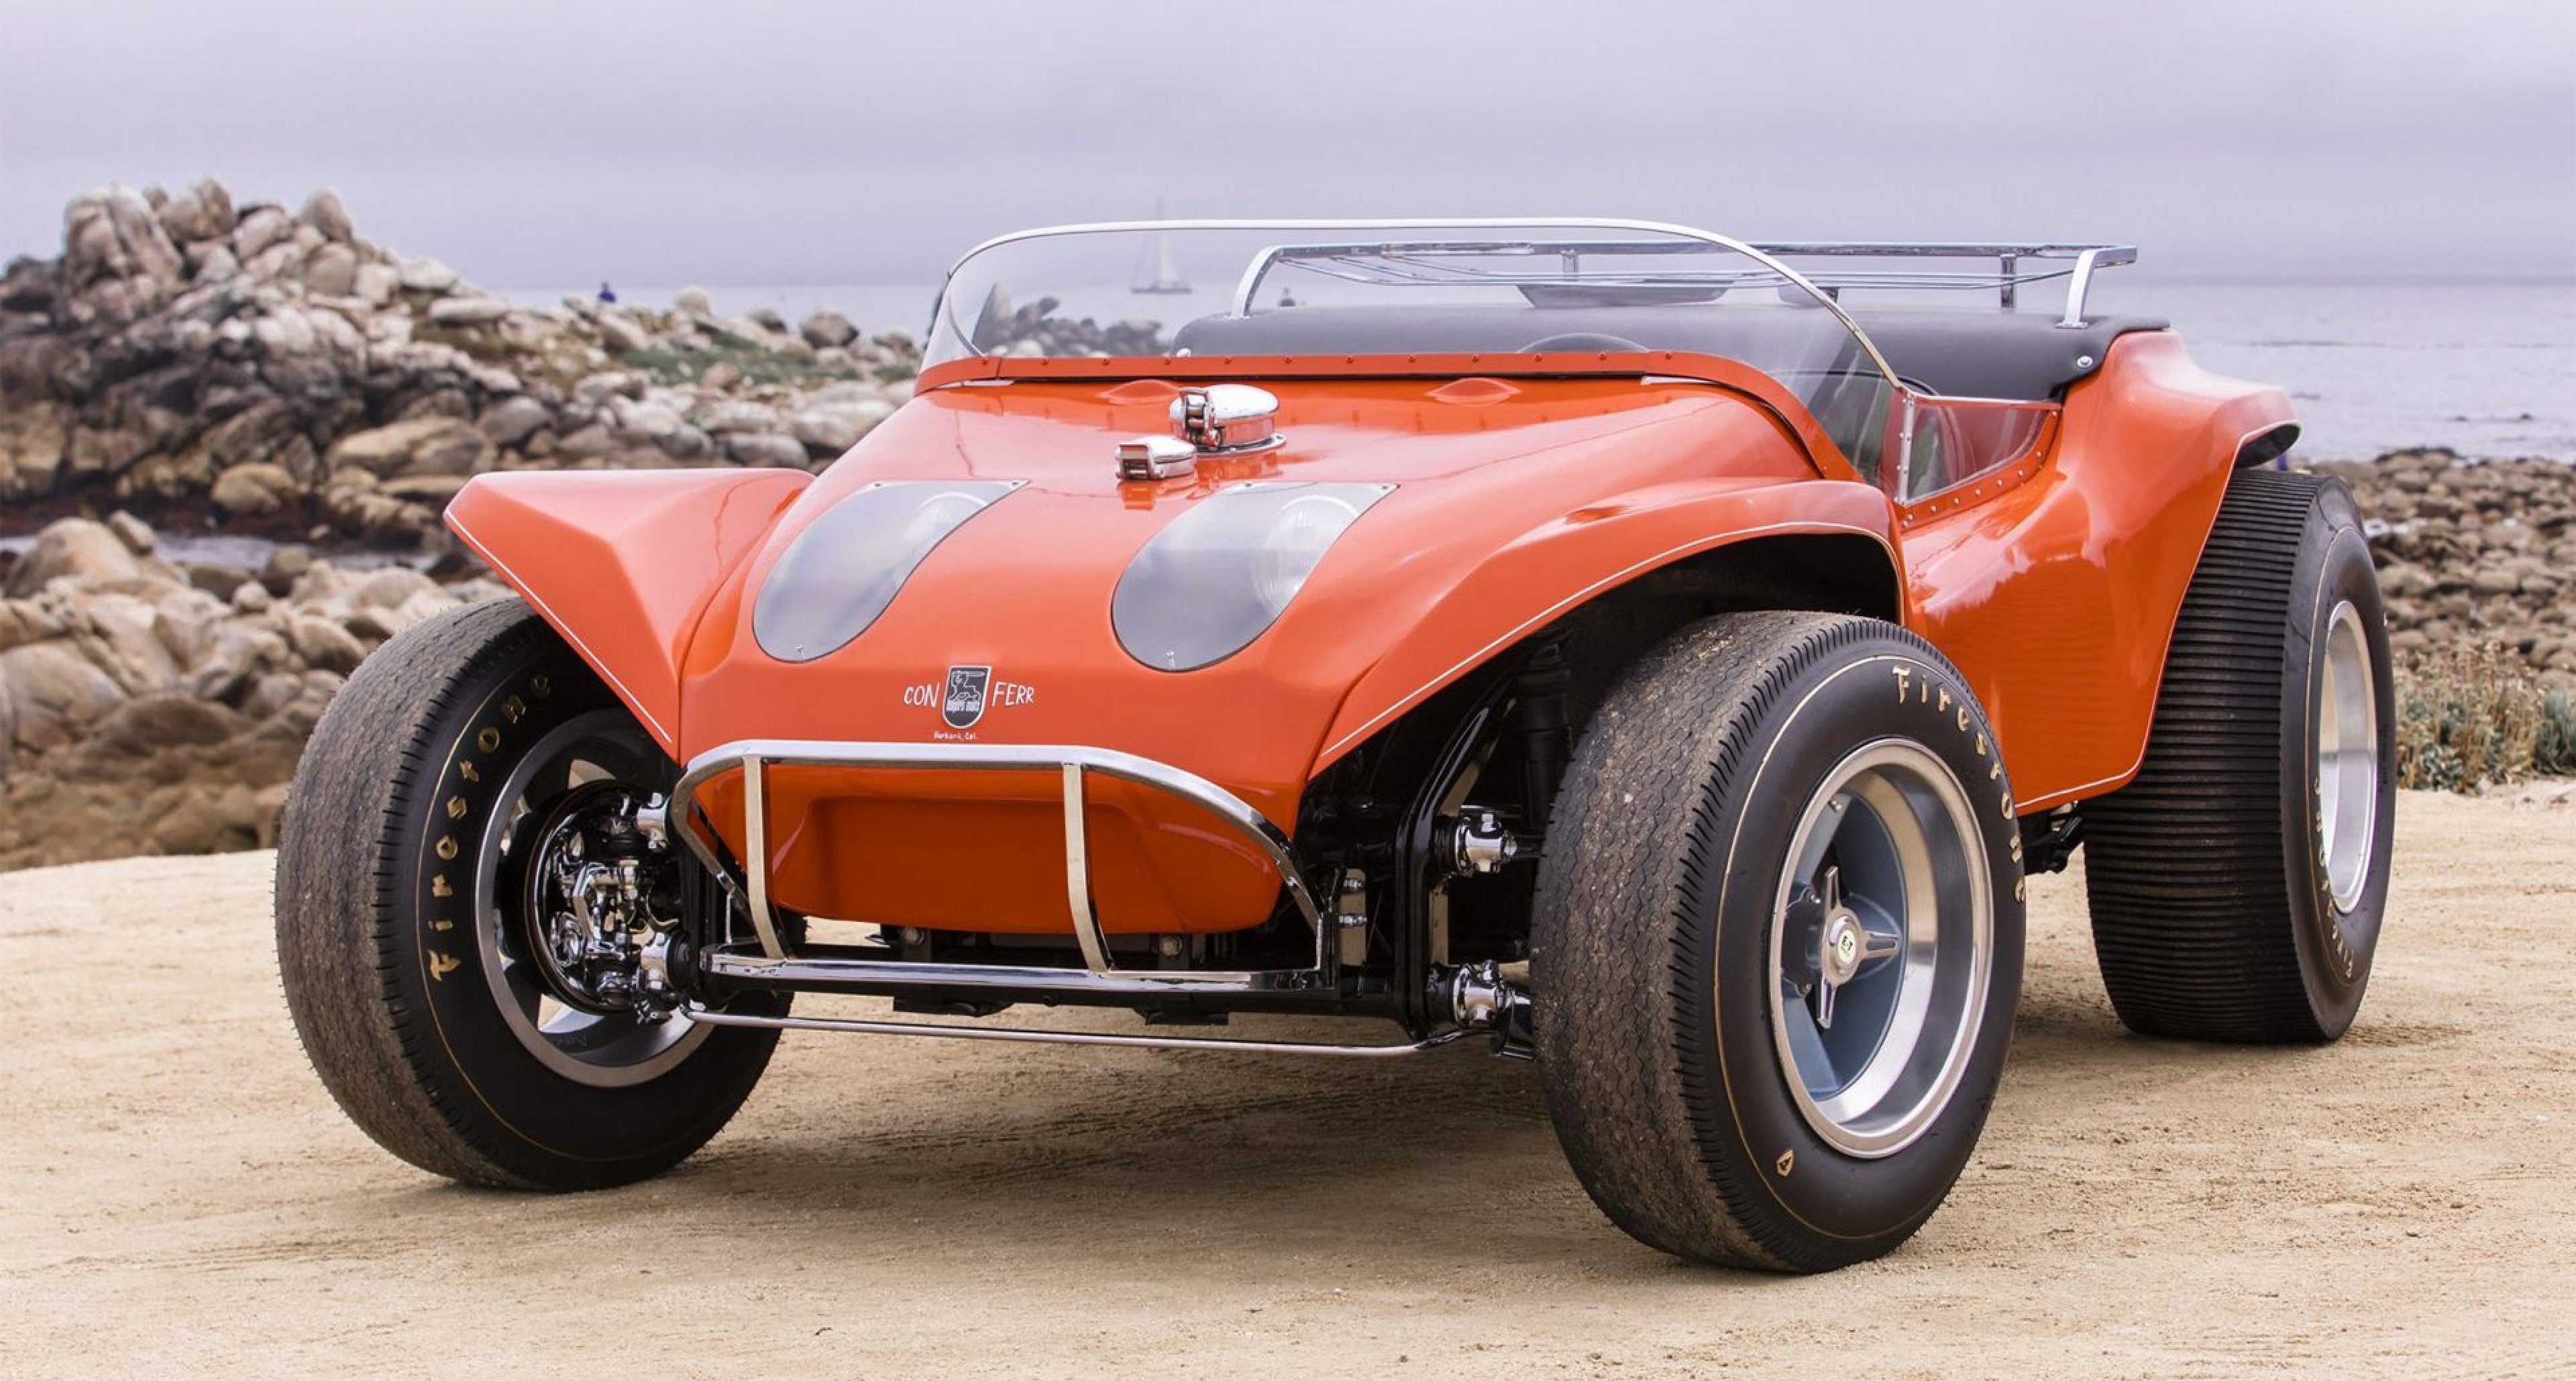 classic dune buggy